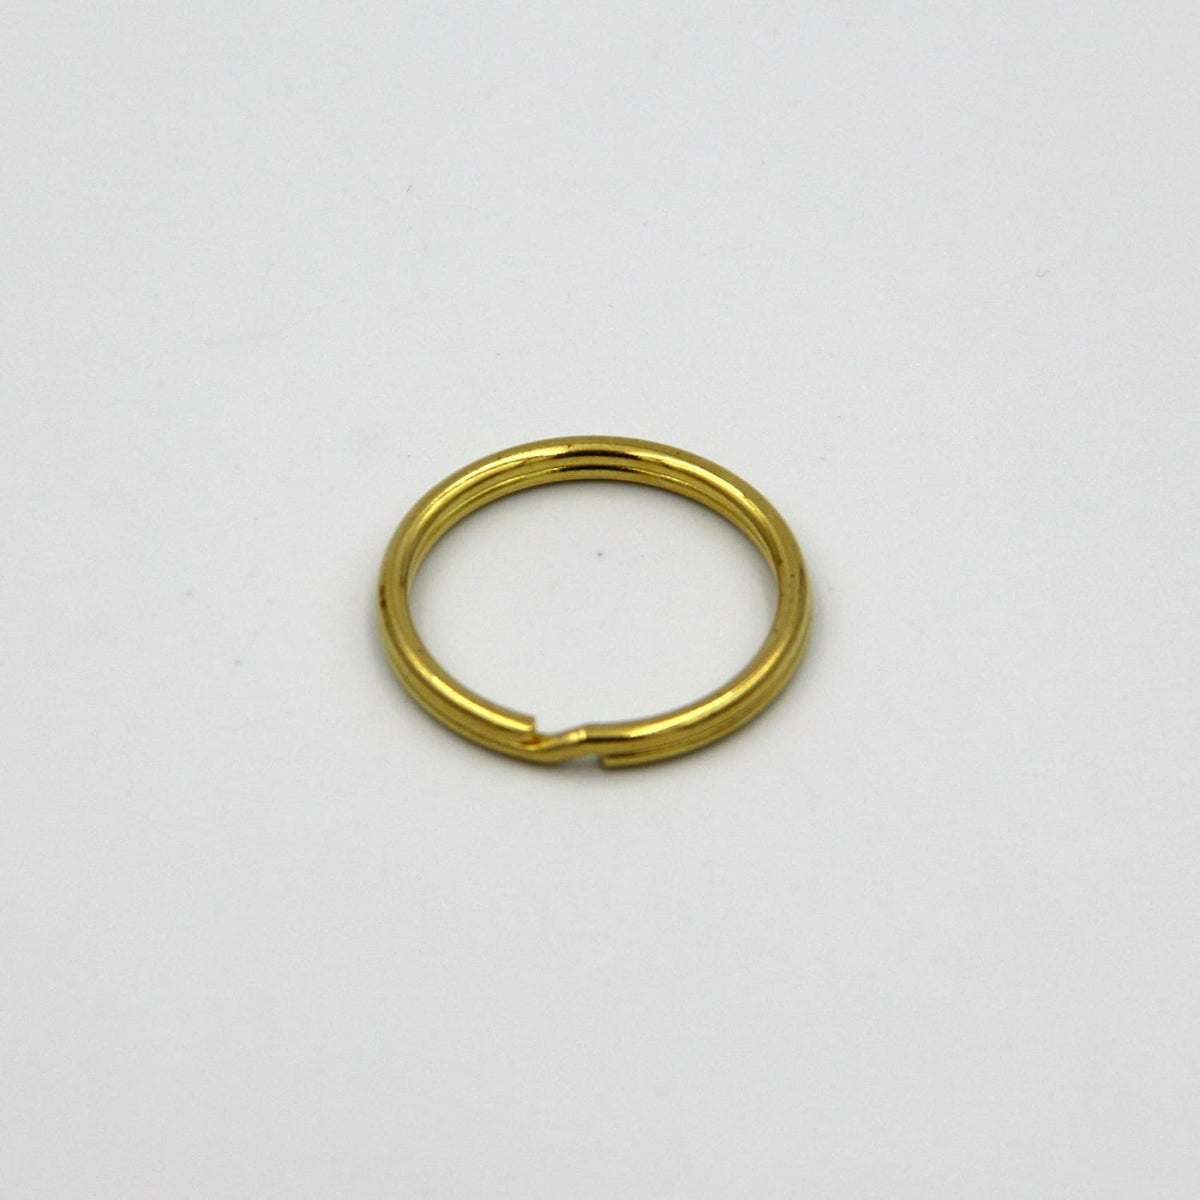 Metal Field Shop Preimium Solid Brass Split Key Ring Brass Connectors Flat Keyrings 10pcs